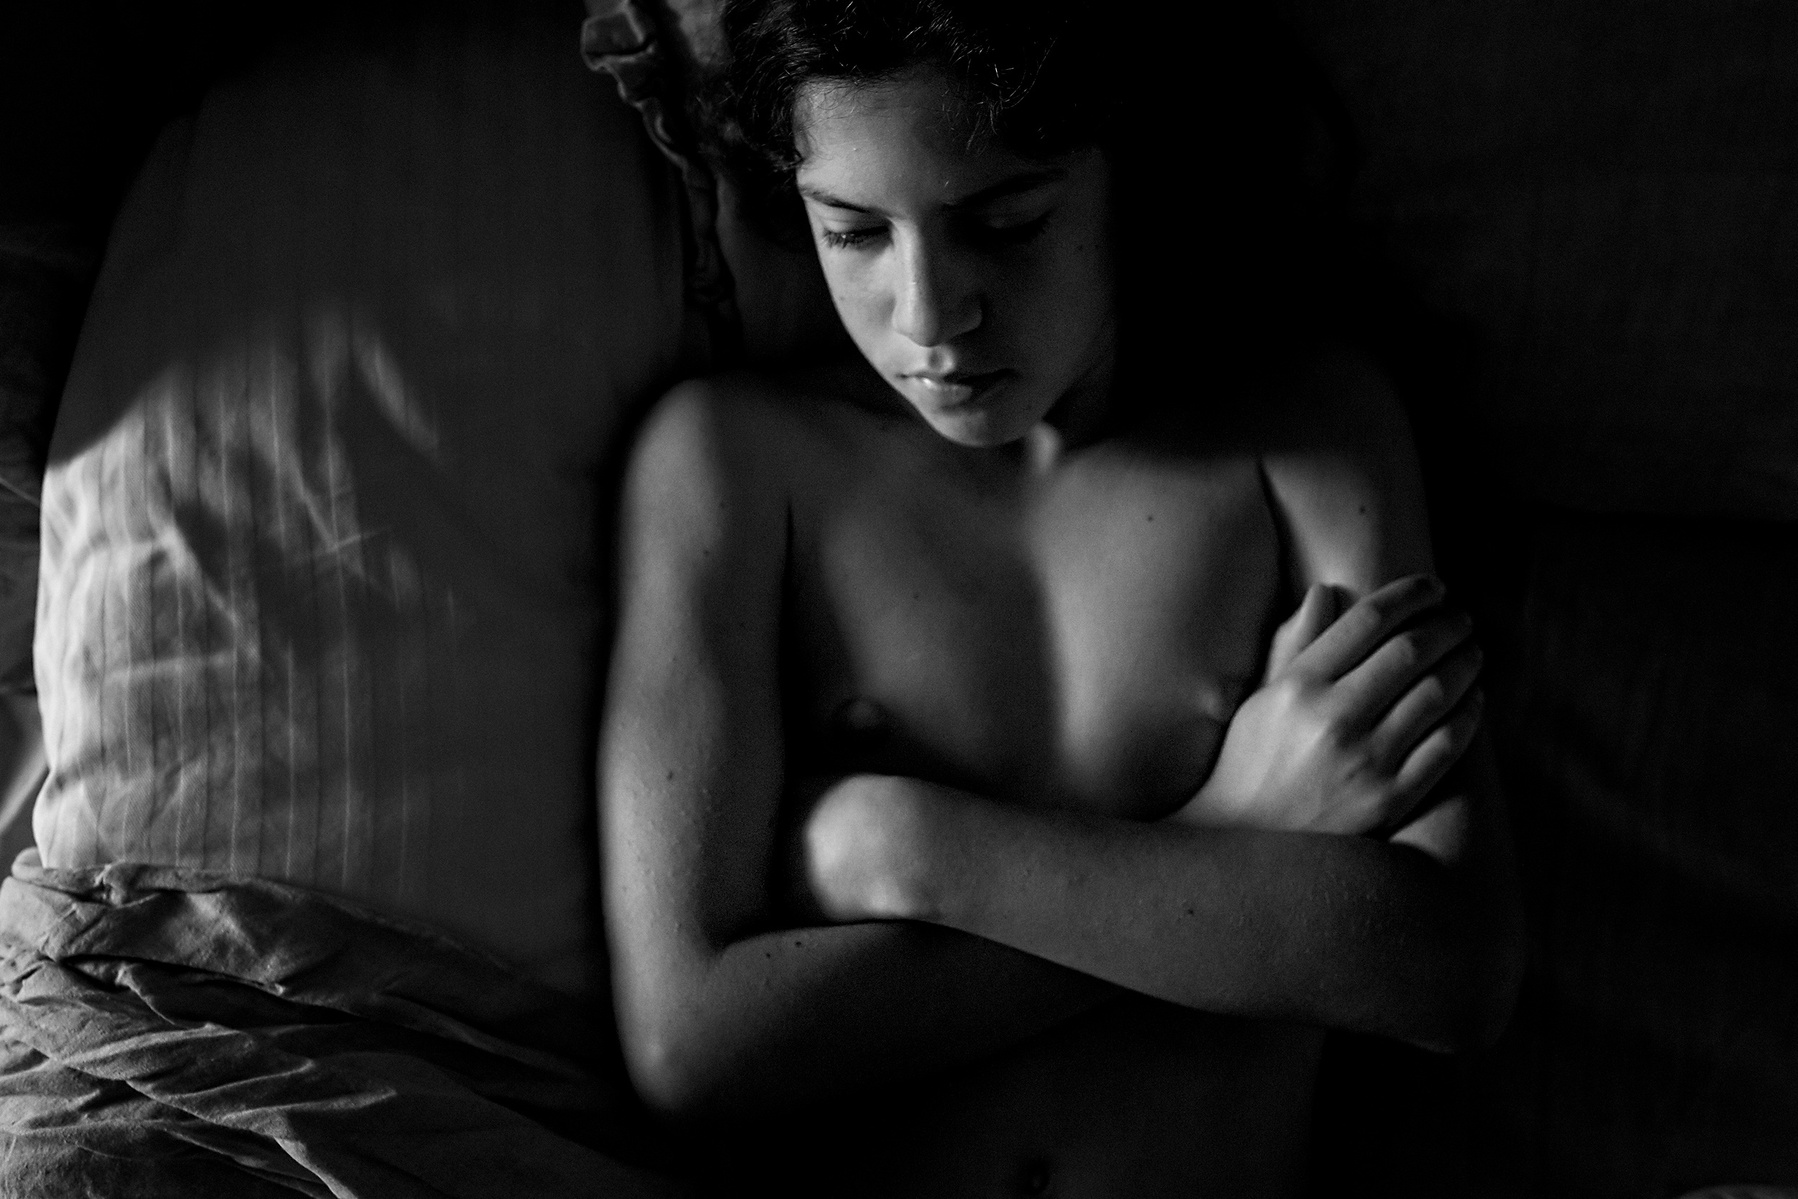 Niño despertándose a la luz de la ventana.
Manuela Franjou Photography